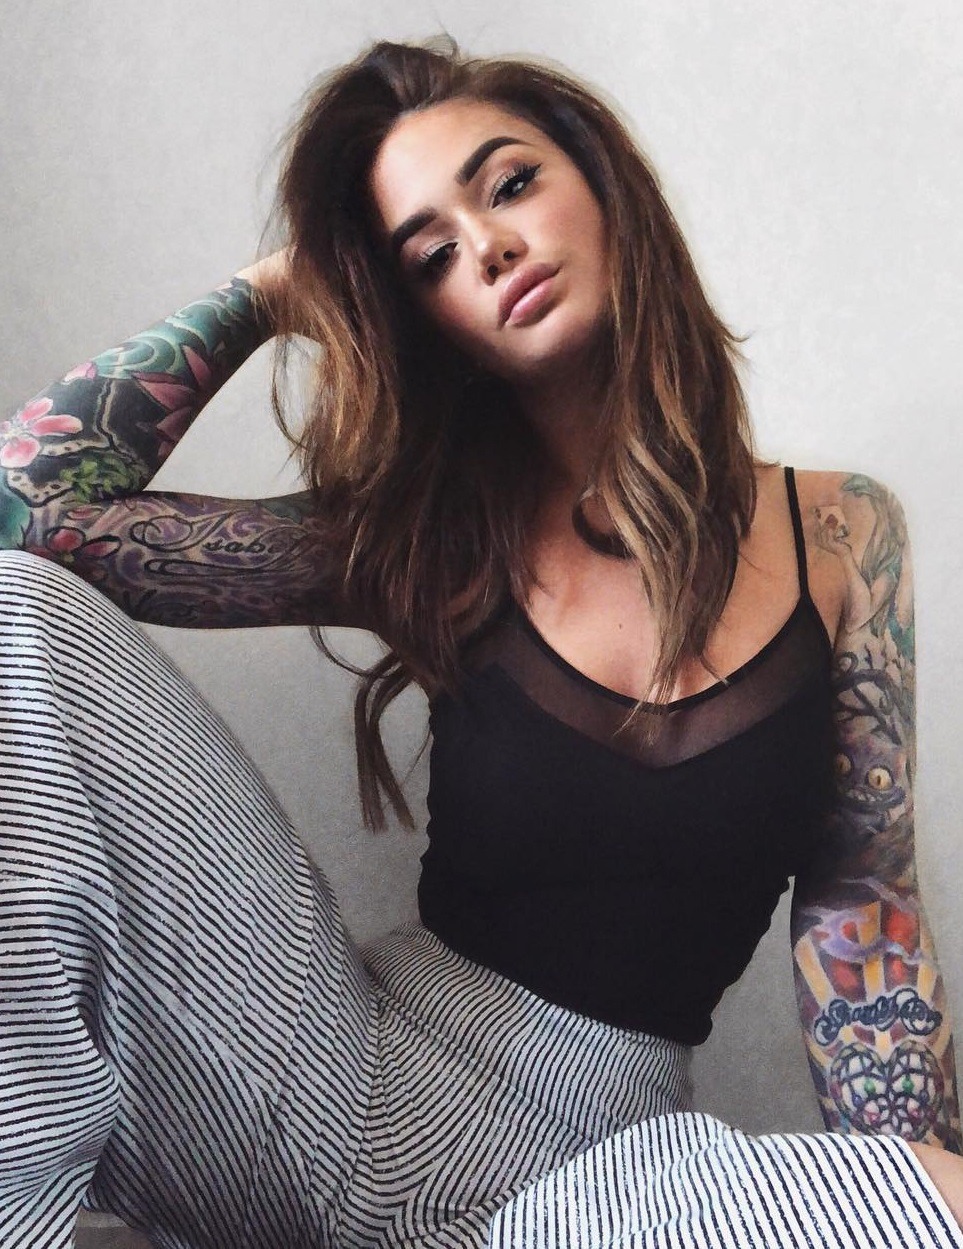 Tattoo Thursday: Jessica Wilde